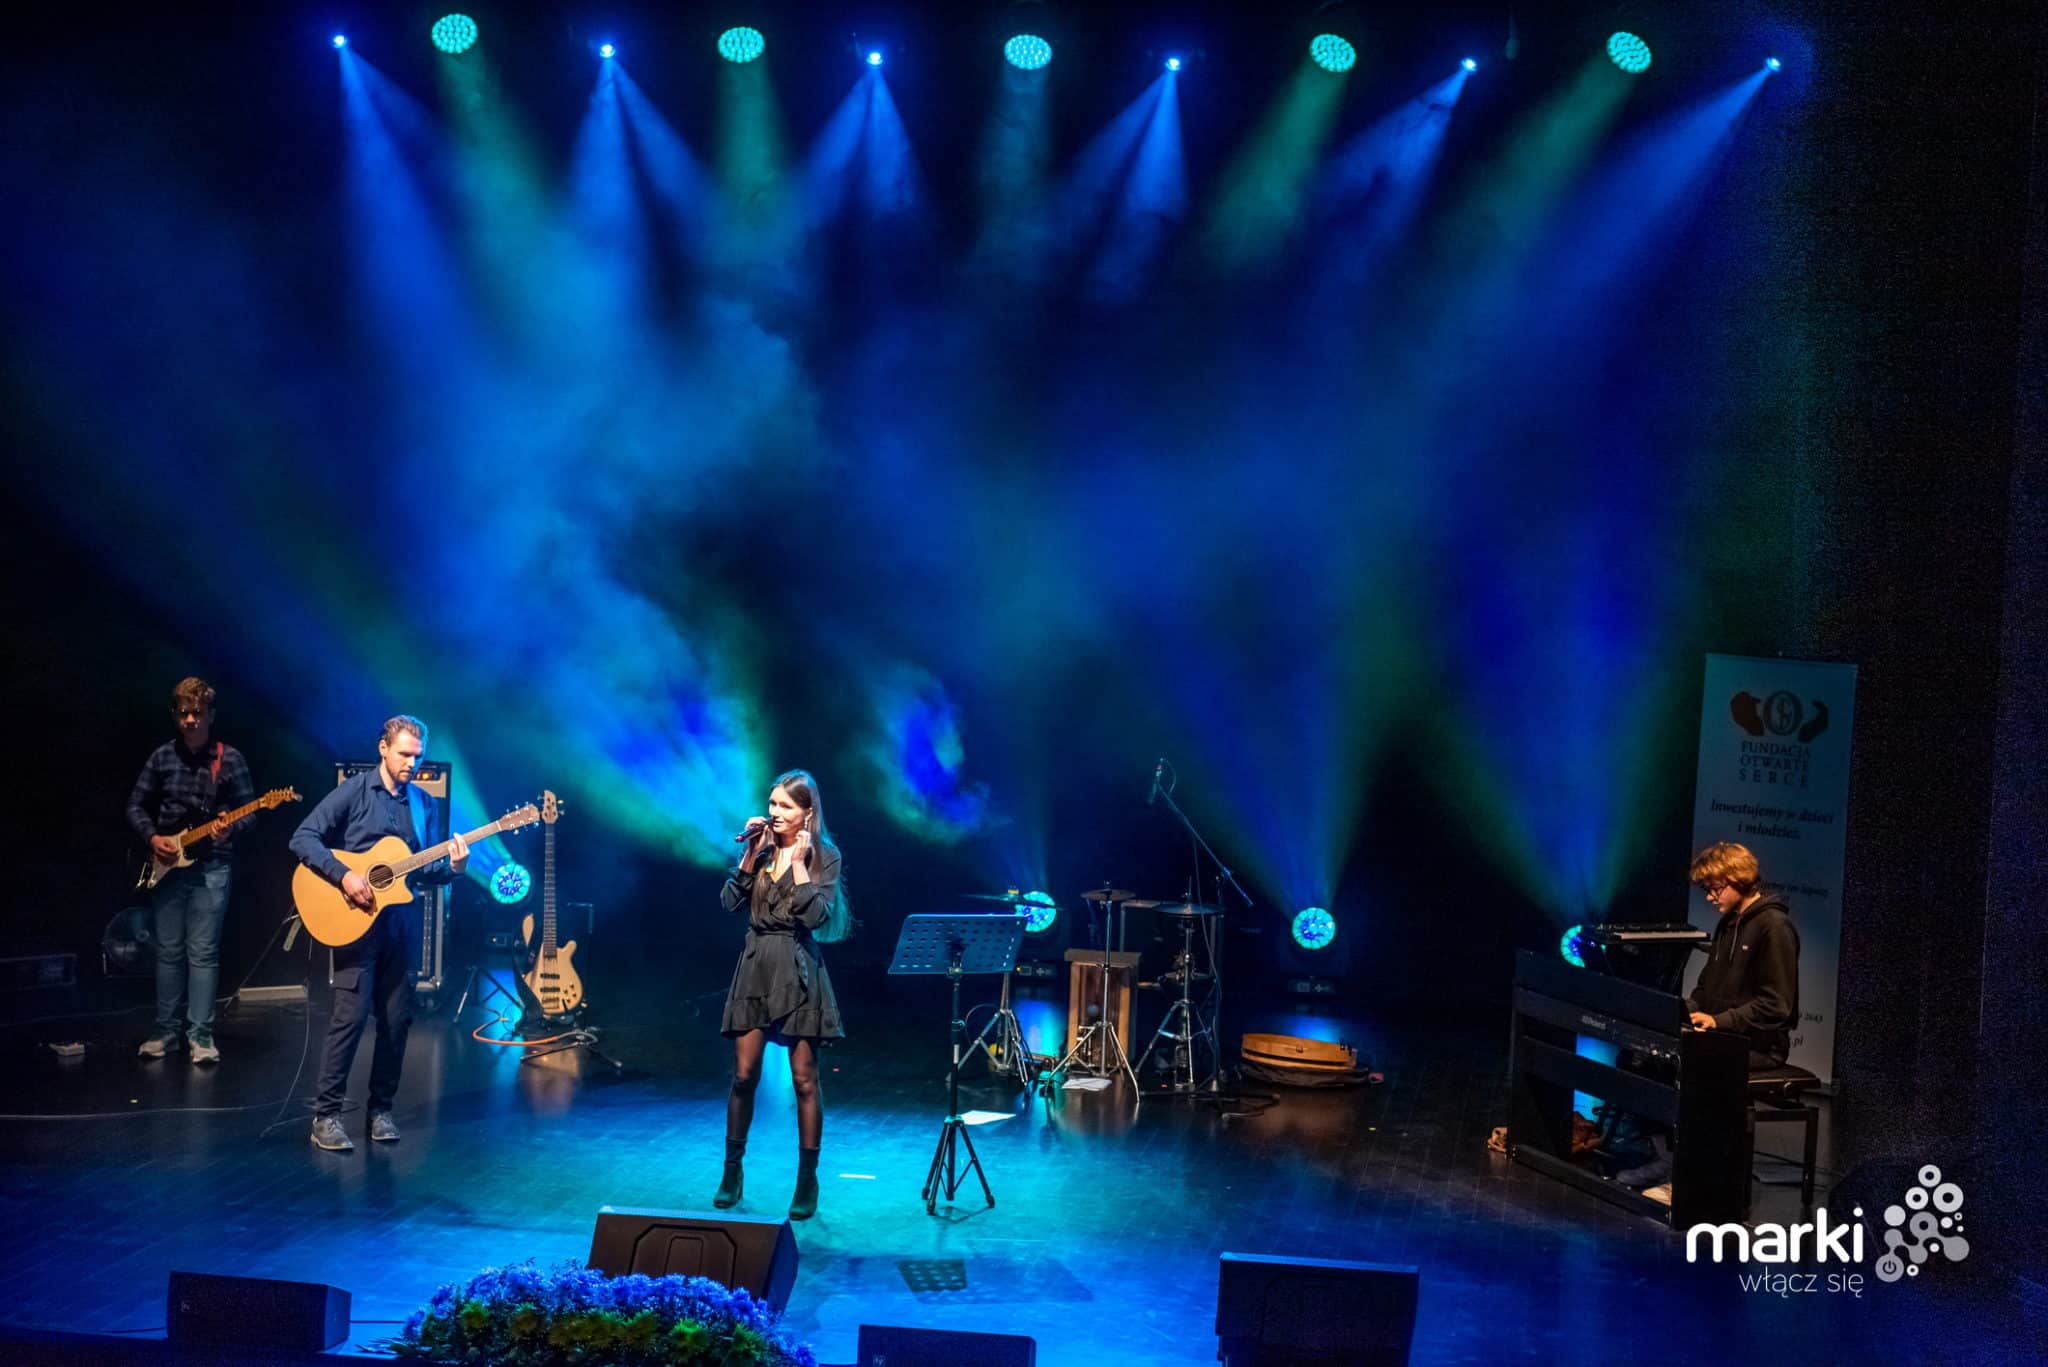 The "Marki for Ukraine" Concert in Marki, Poland